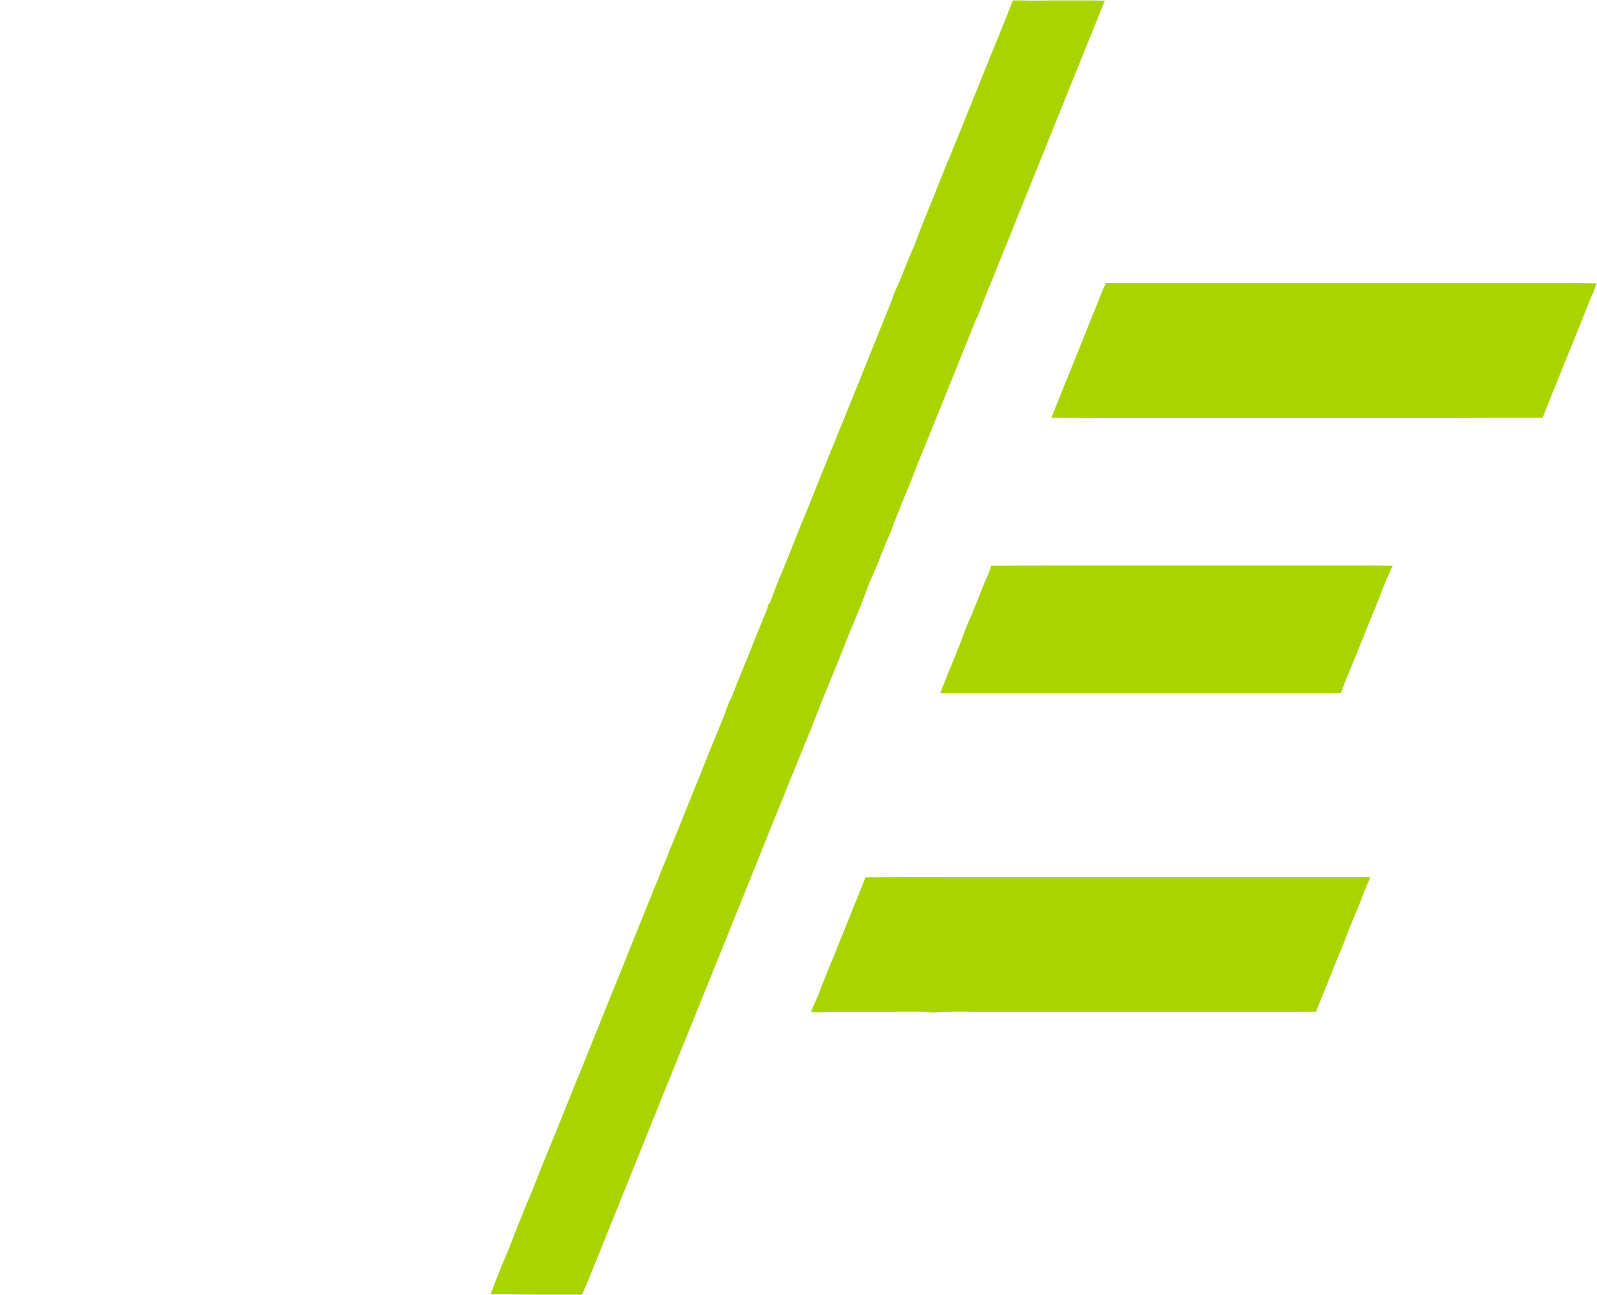 5E Advanced Materials logo for dark backgrounds (transparent PNG)